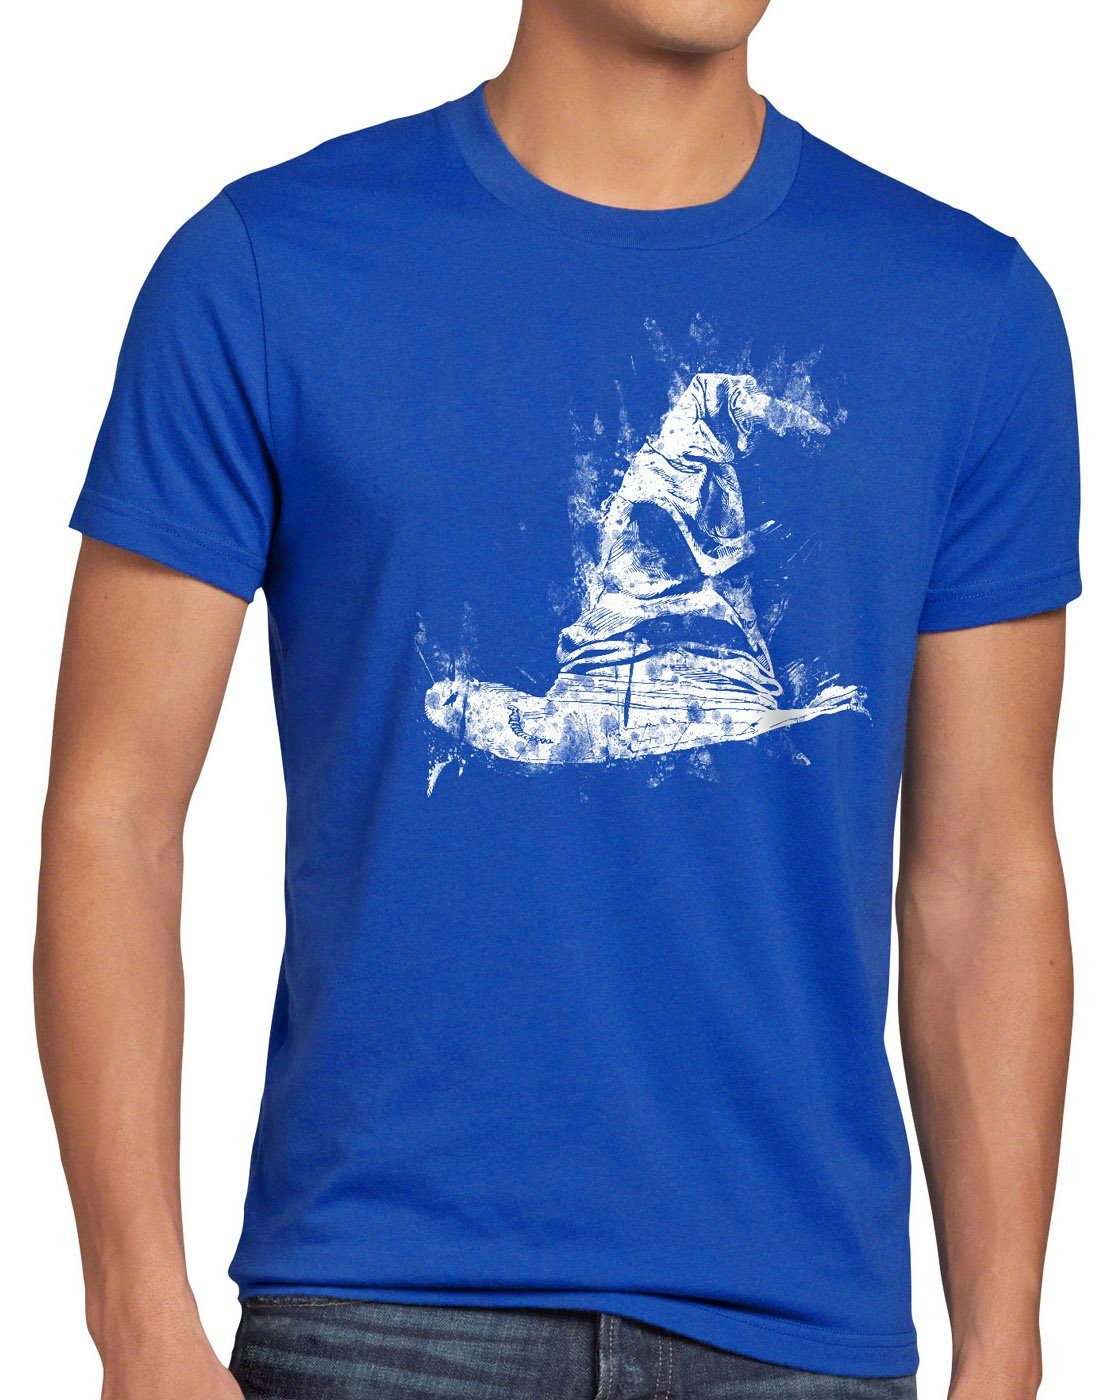 style3 Print-Shirt Herren T-Shirt Sprechender Hut Potter Zauberer Hogwarts Harry voldemort snape